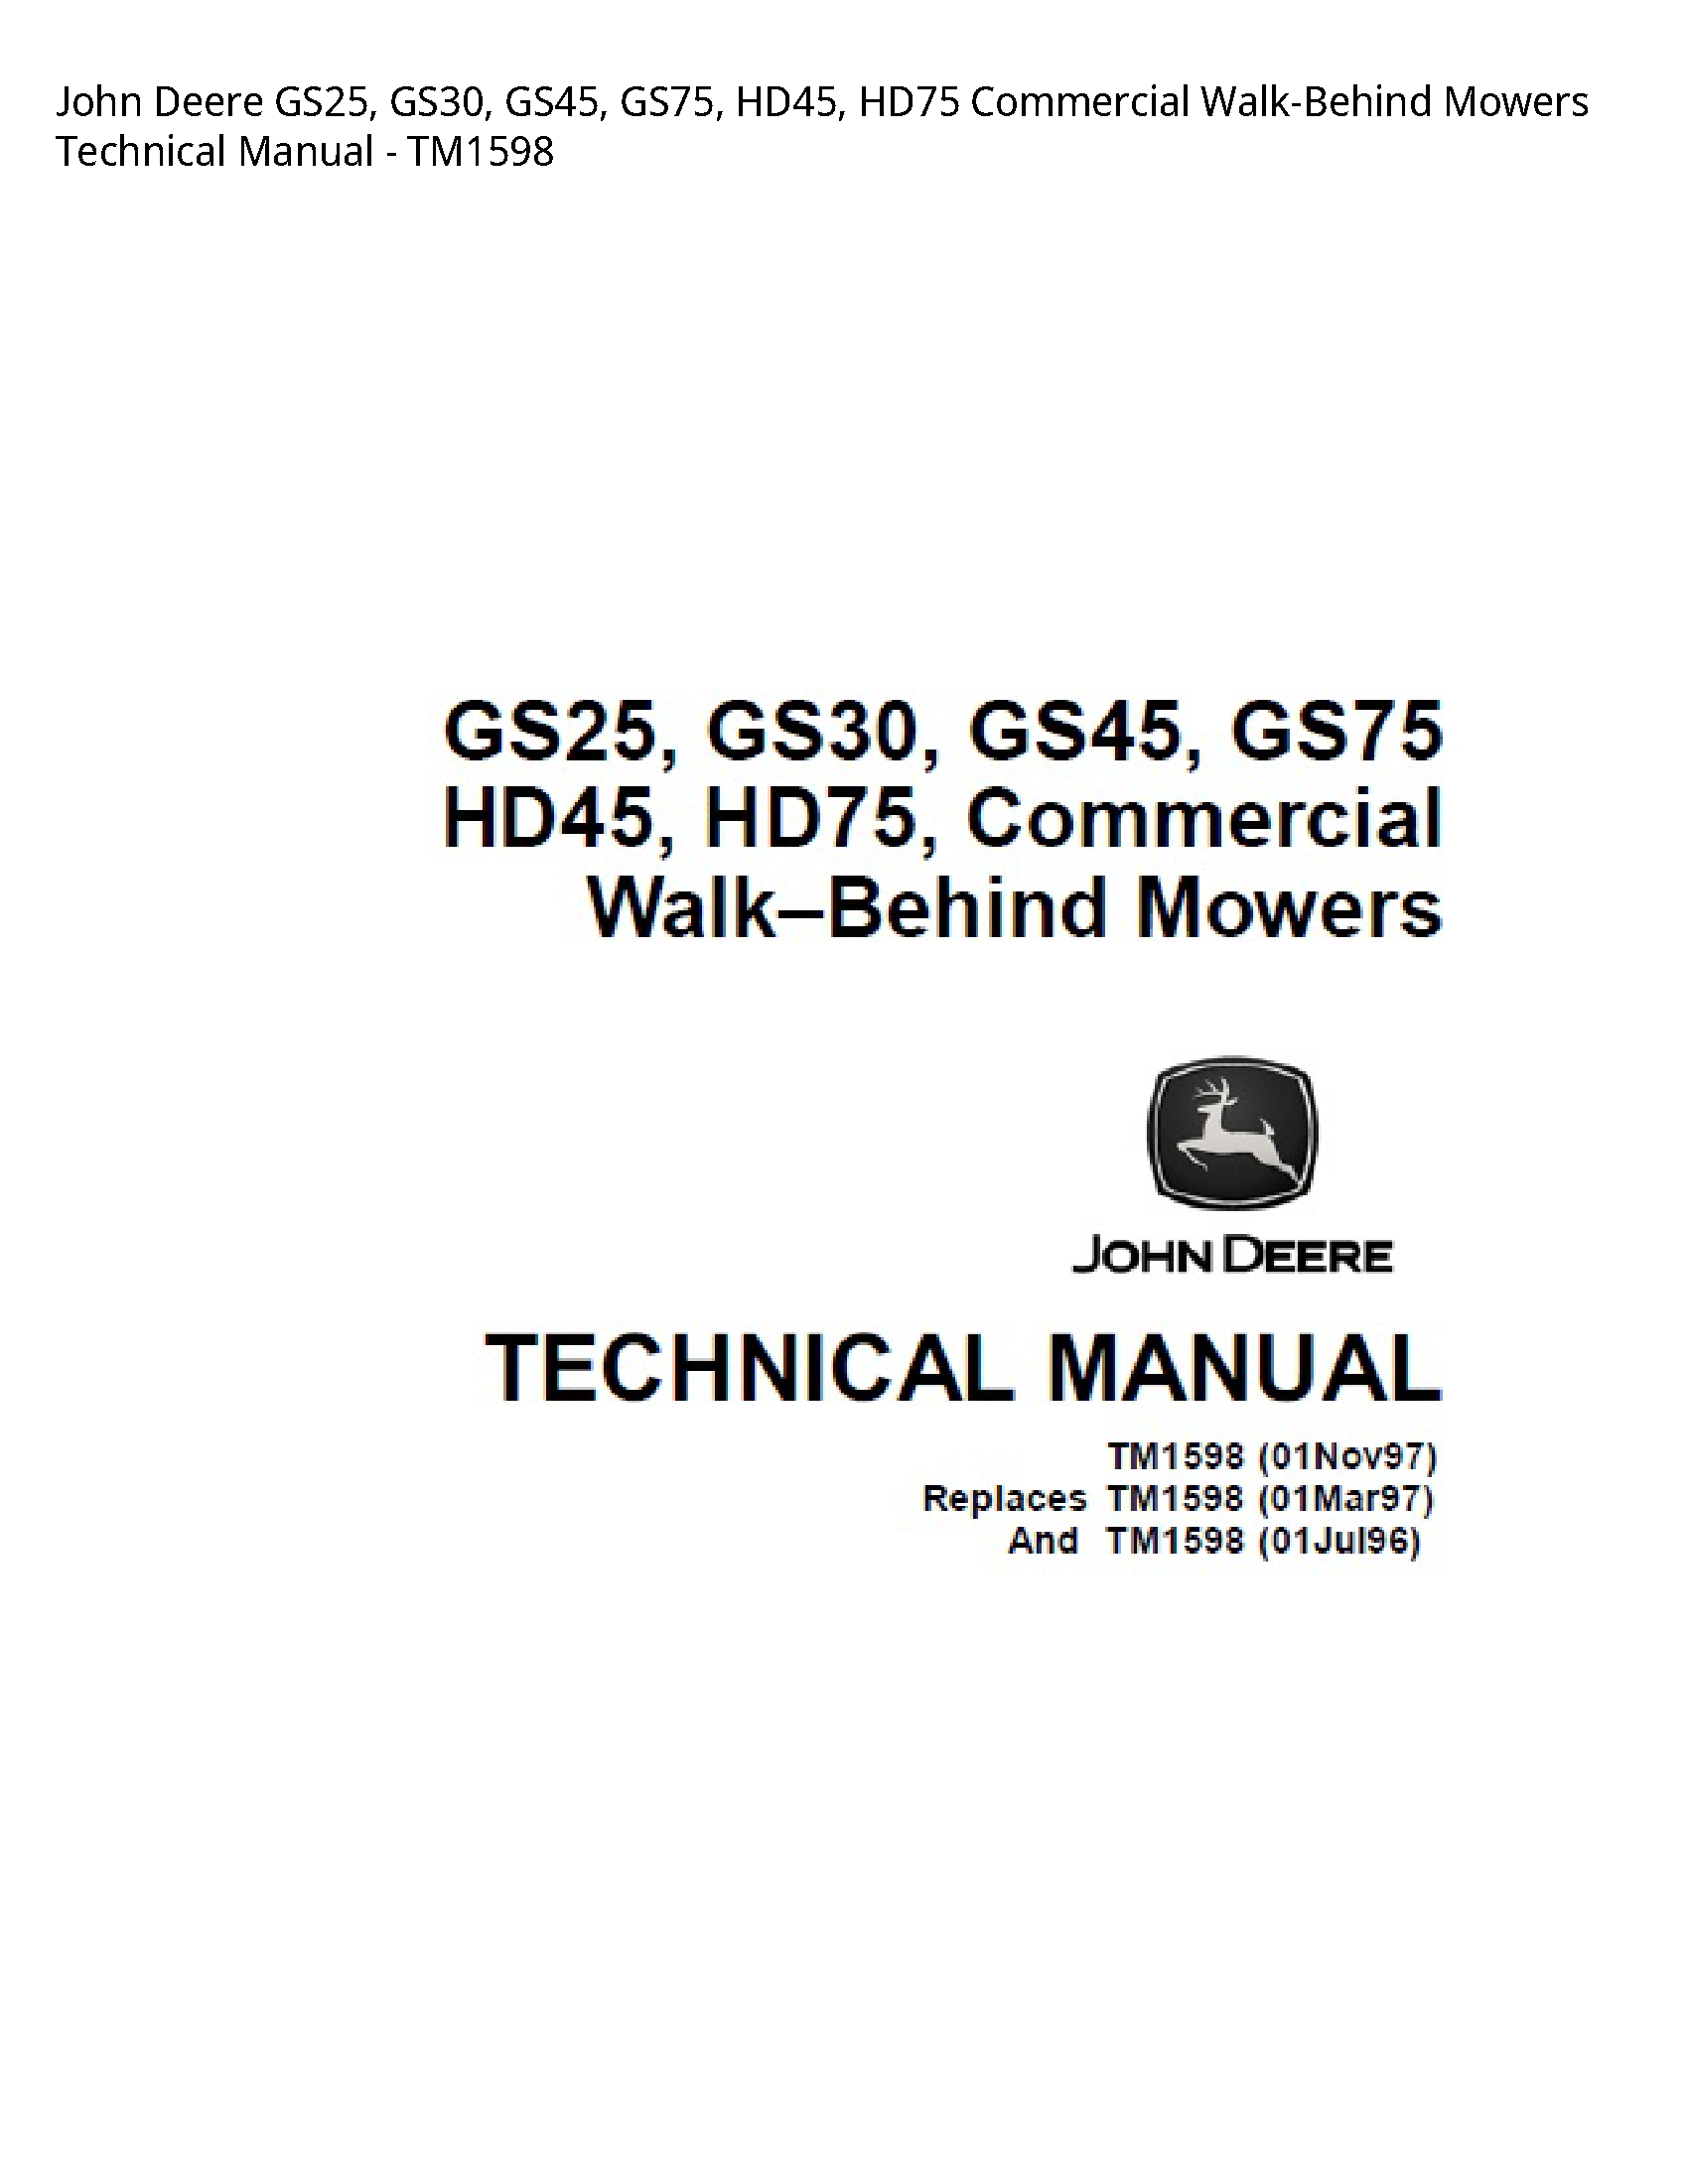 John Deere GS25 Commercial Walk-Behind Mowers Technical manual